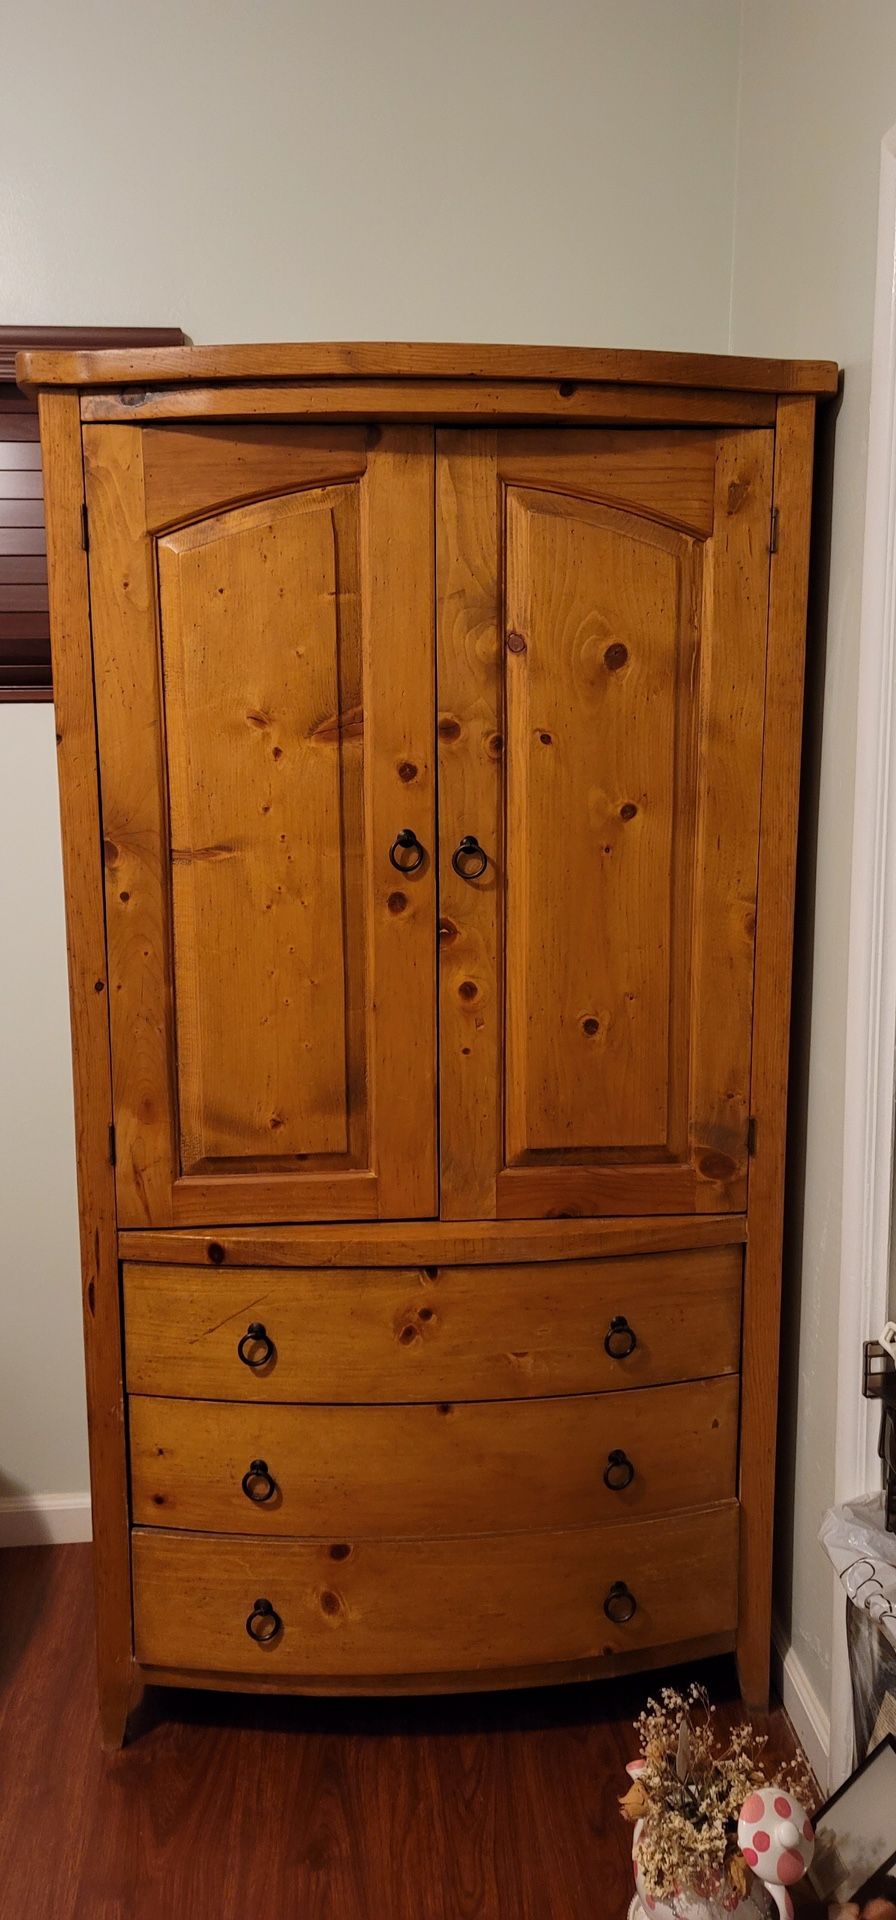 Solid wood dresser closet